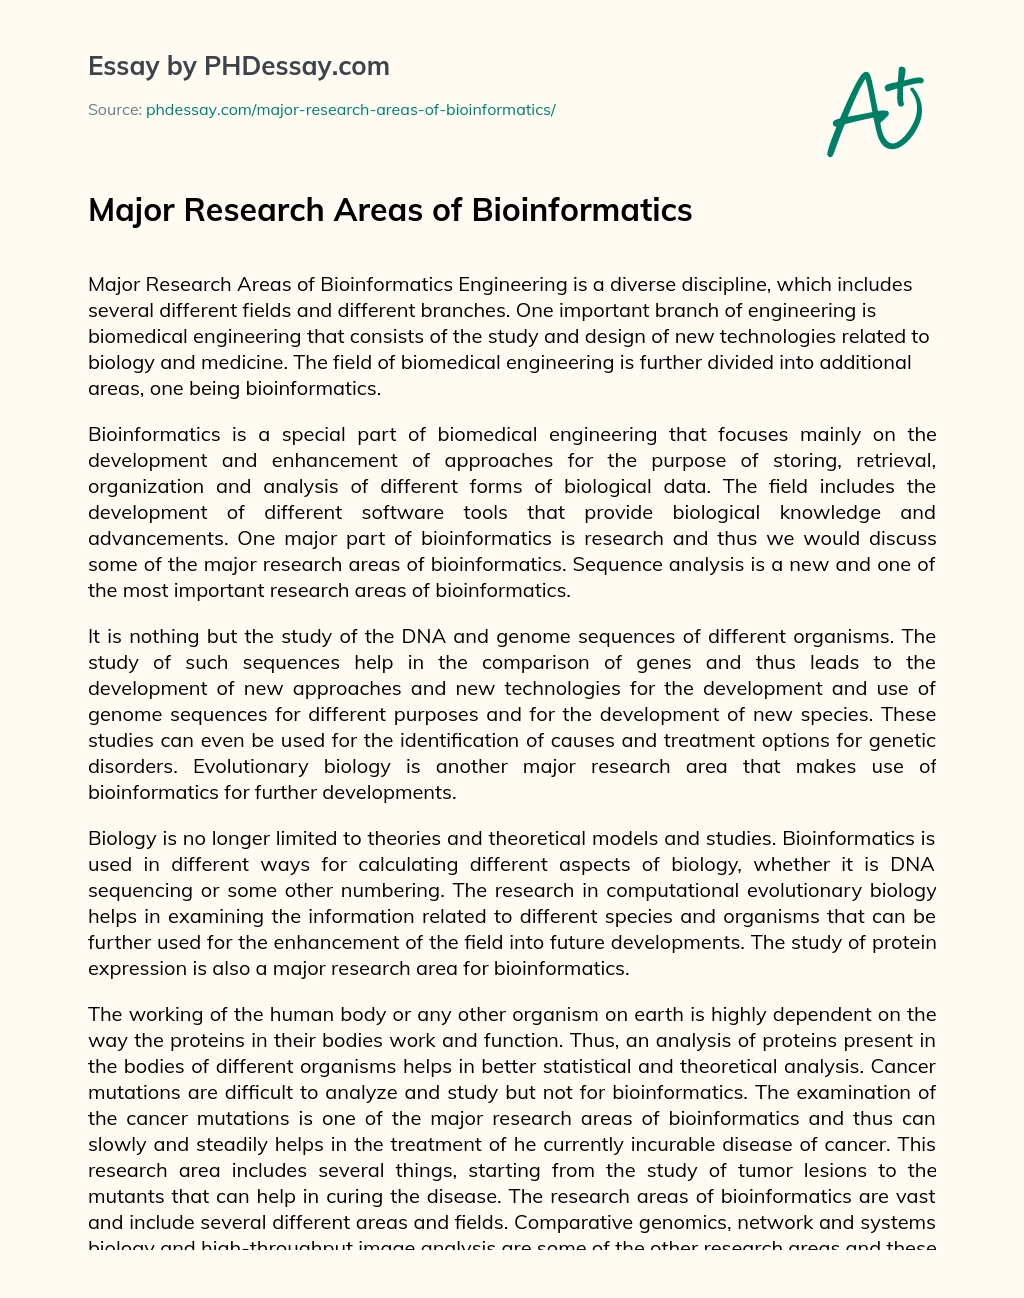 Major Research Areas of Bioinformatics essay